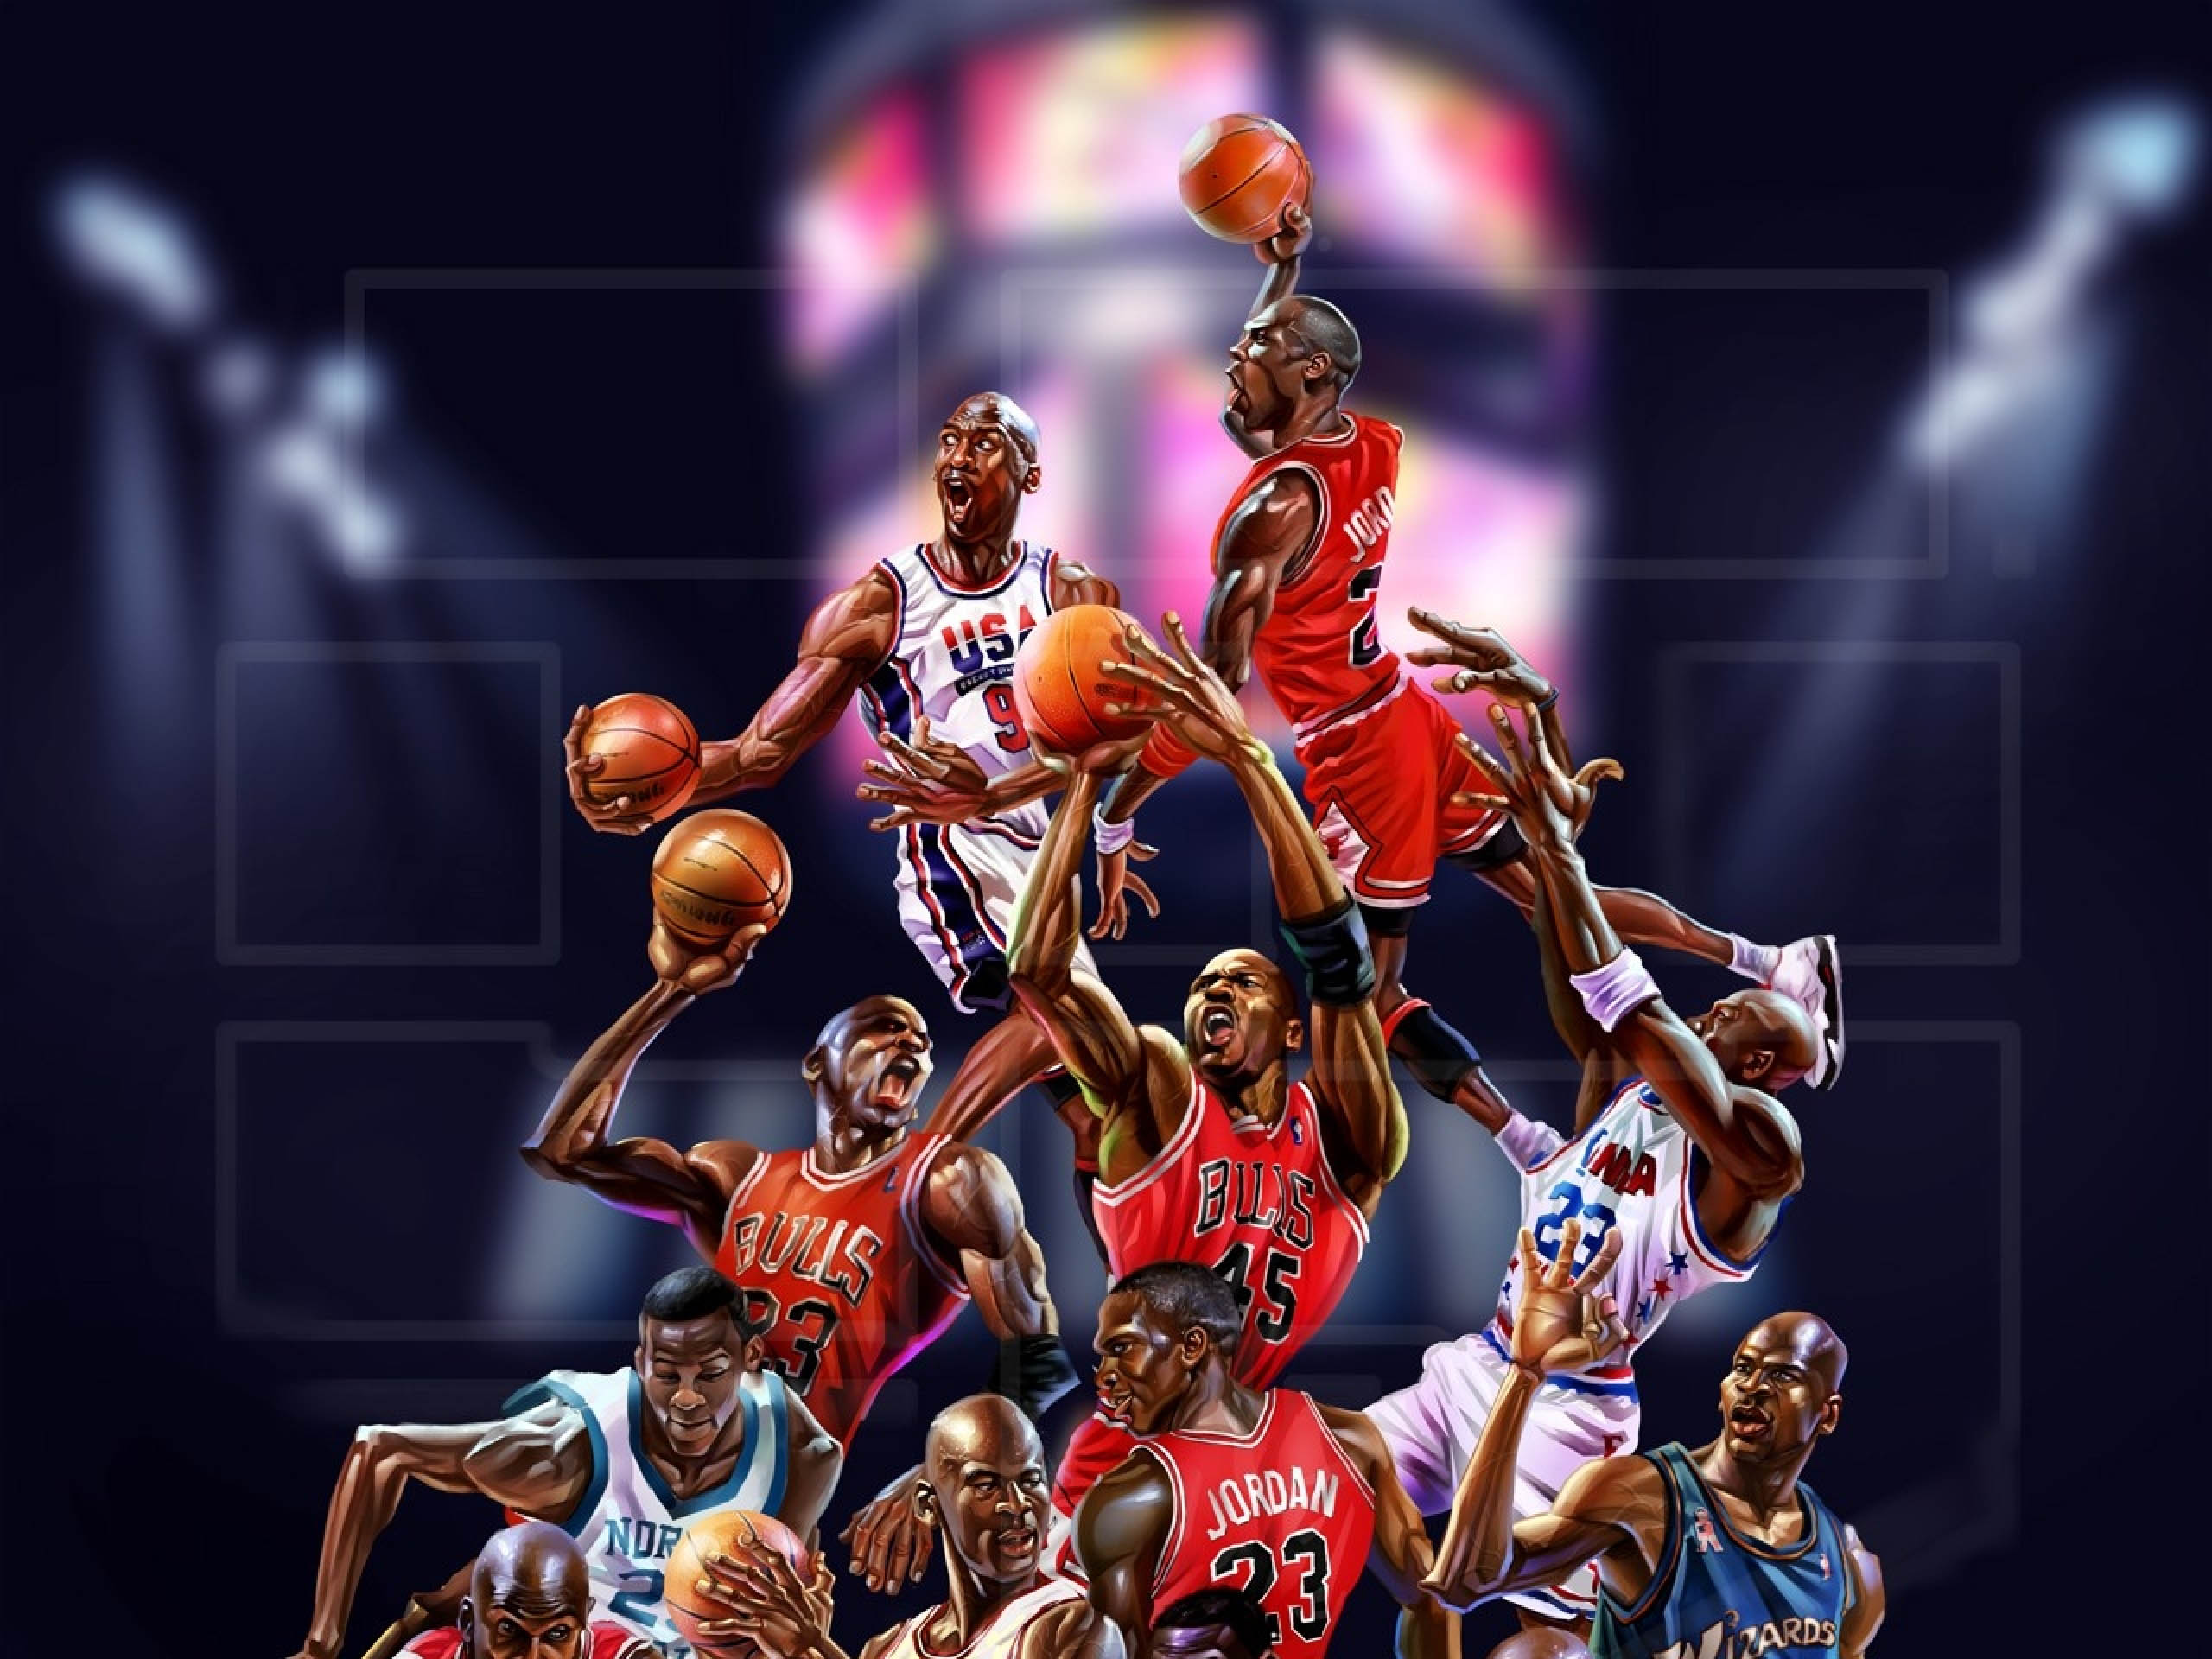 jordan wallpaper hd,basketball player,team,championship,basketball,competition event